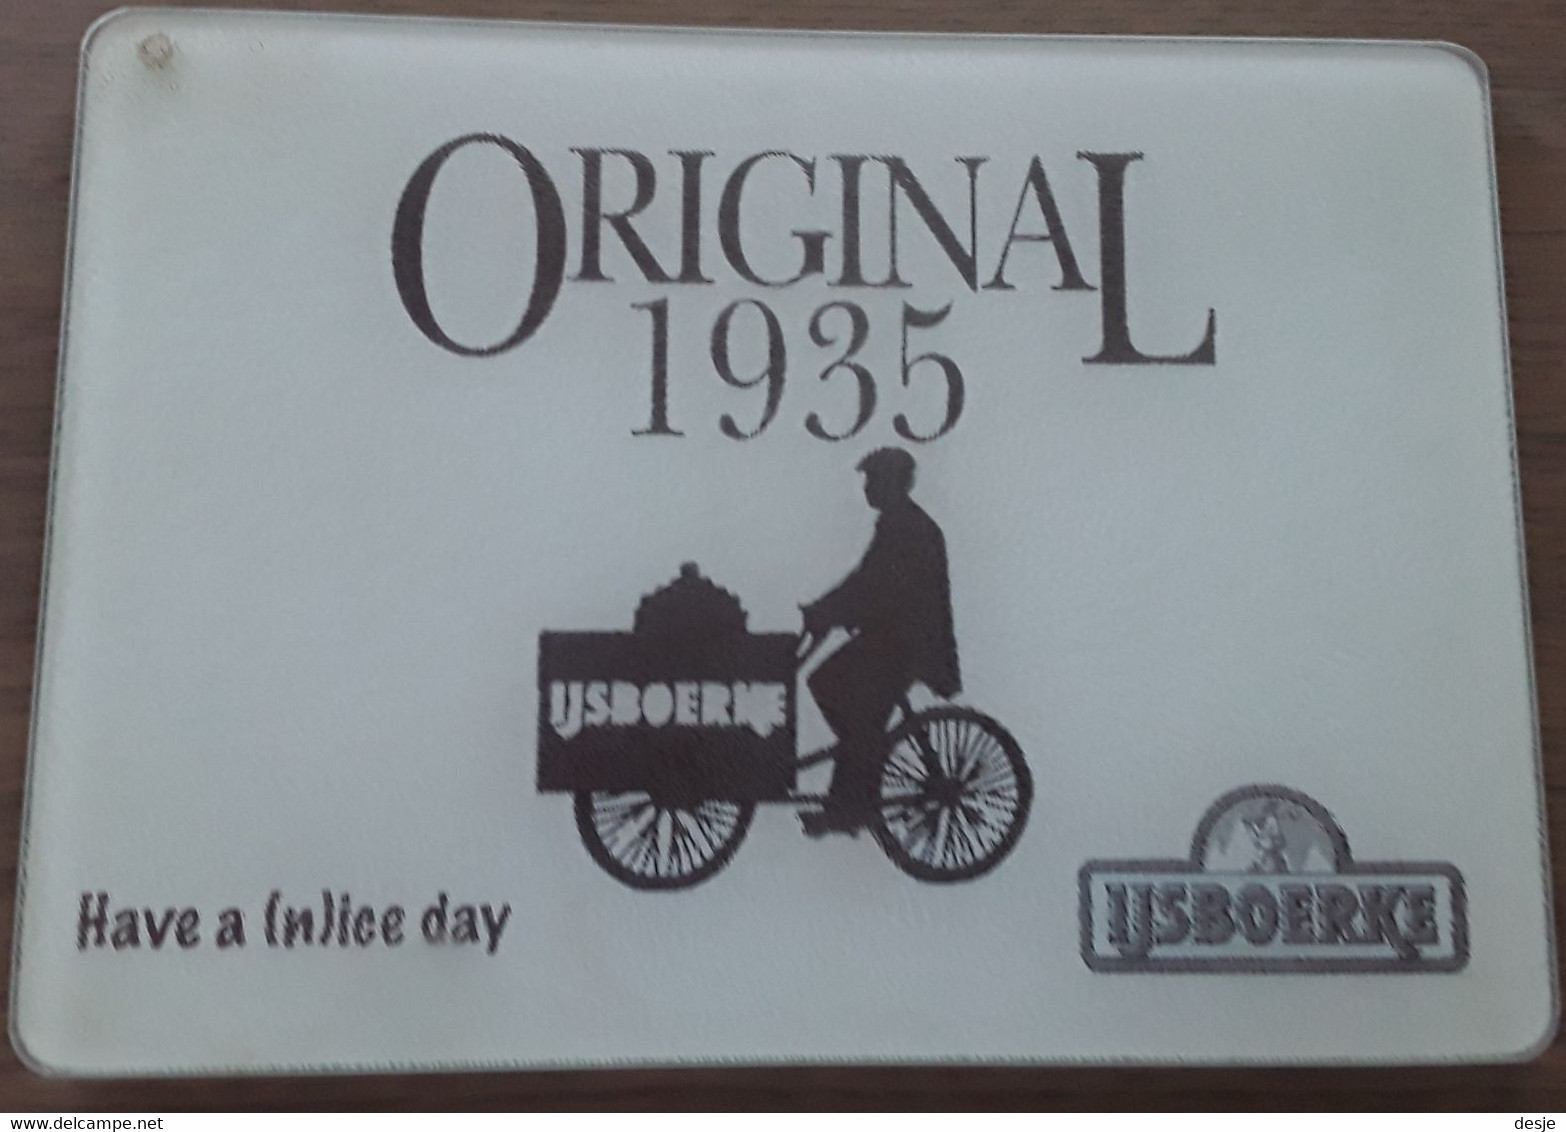 Ijsboerke Original 1935 Have A (n)ice Day - Posters